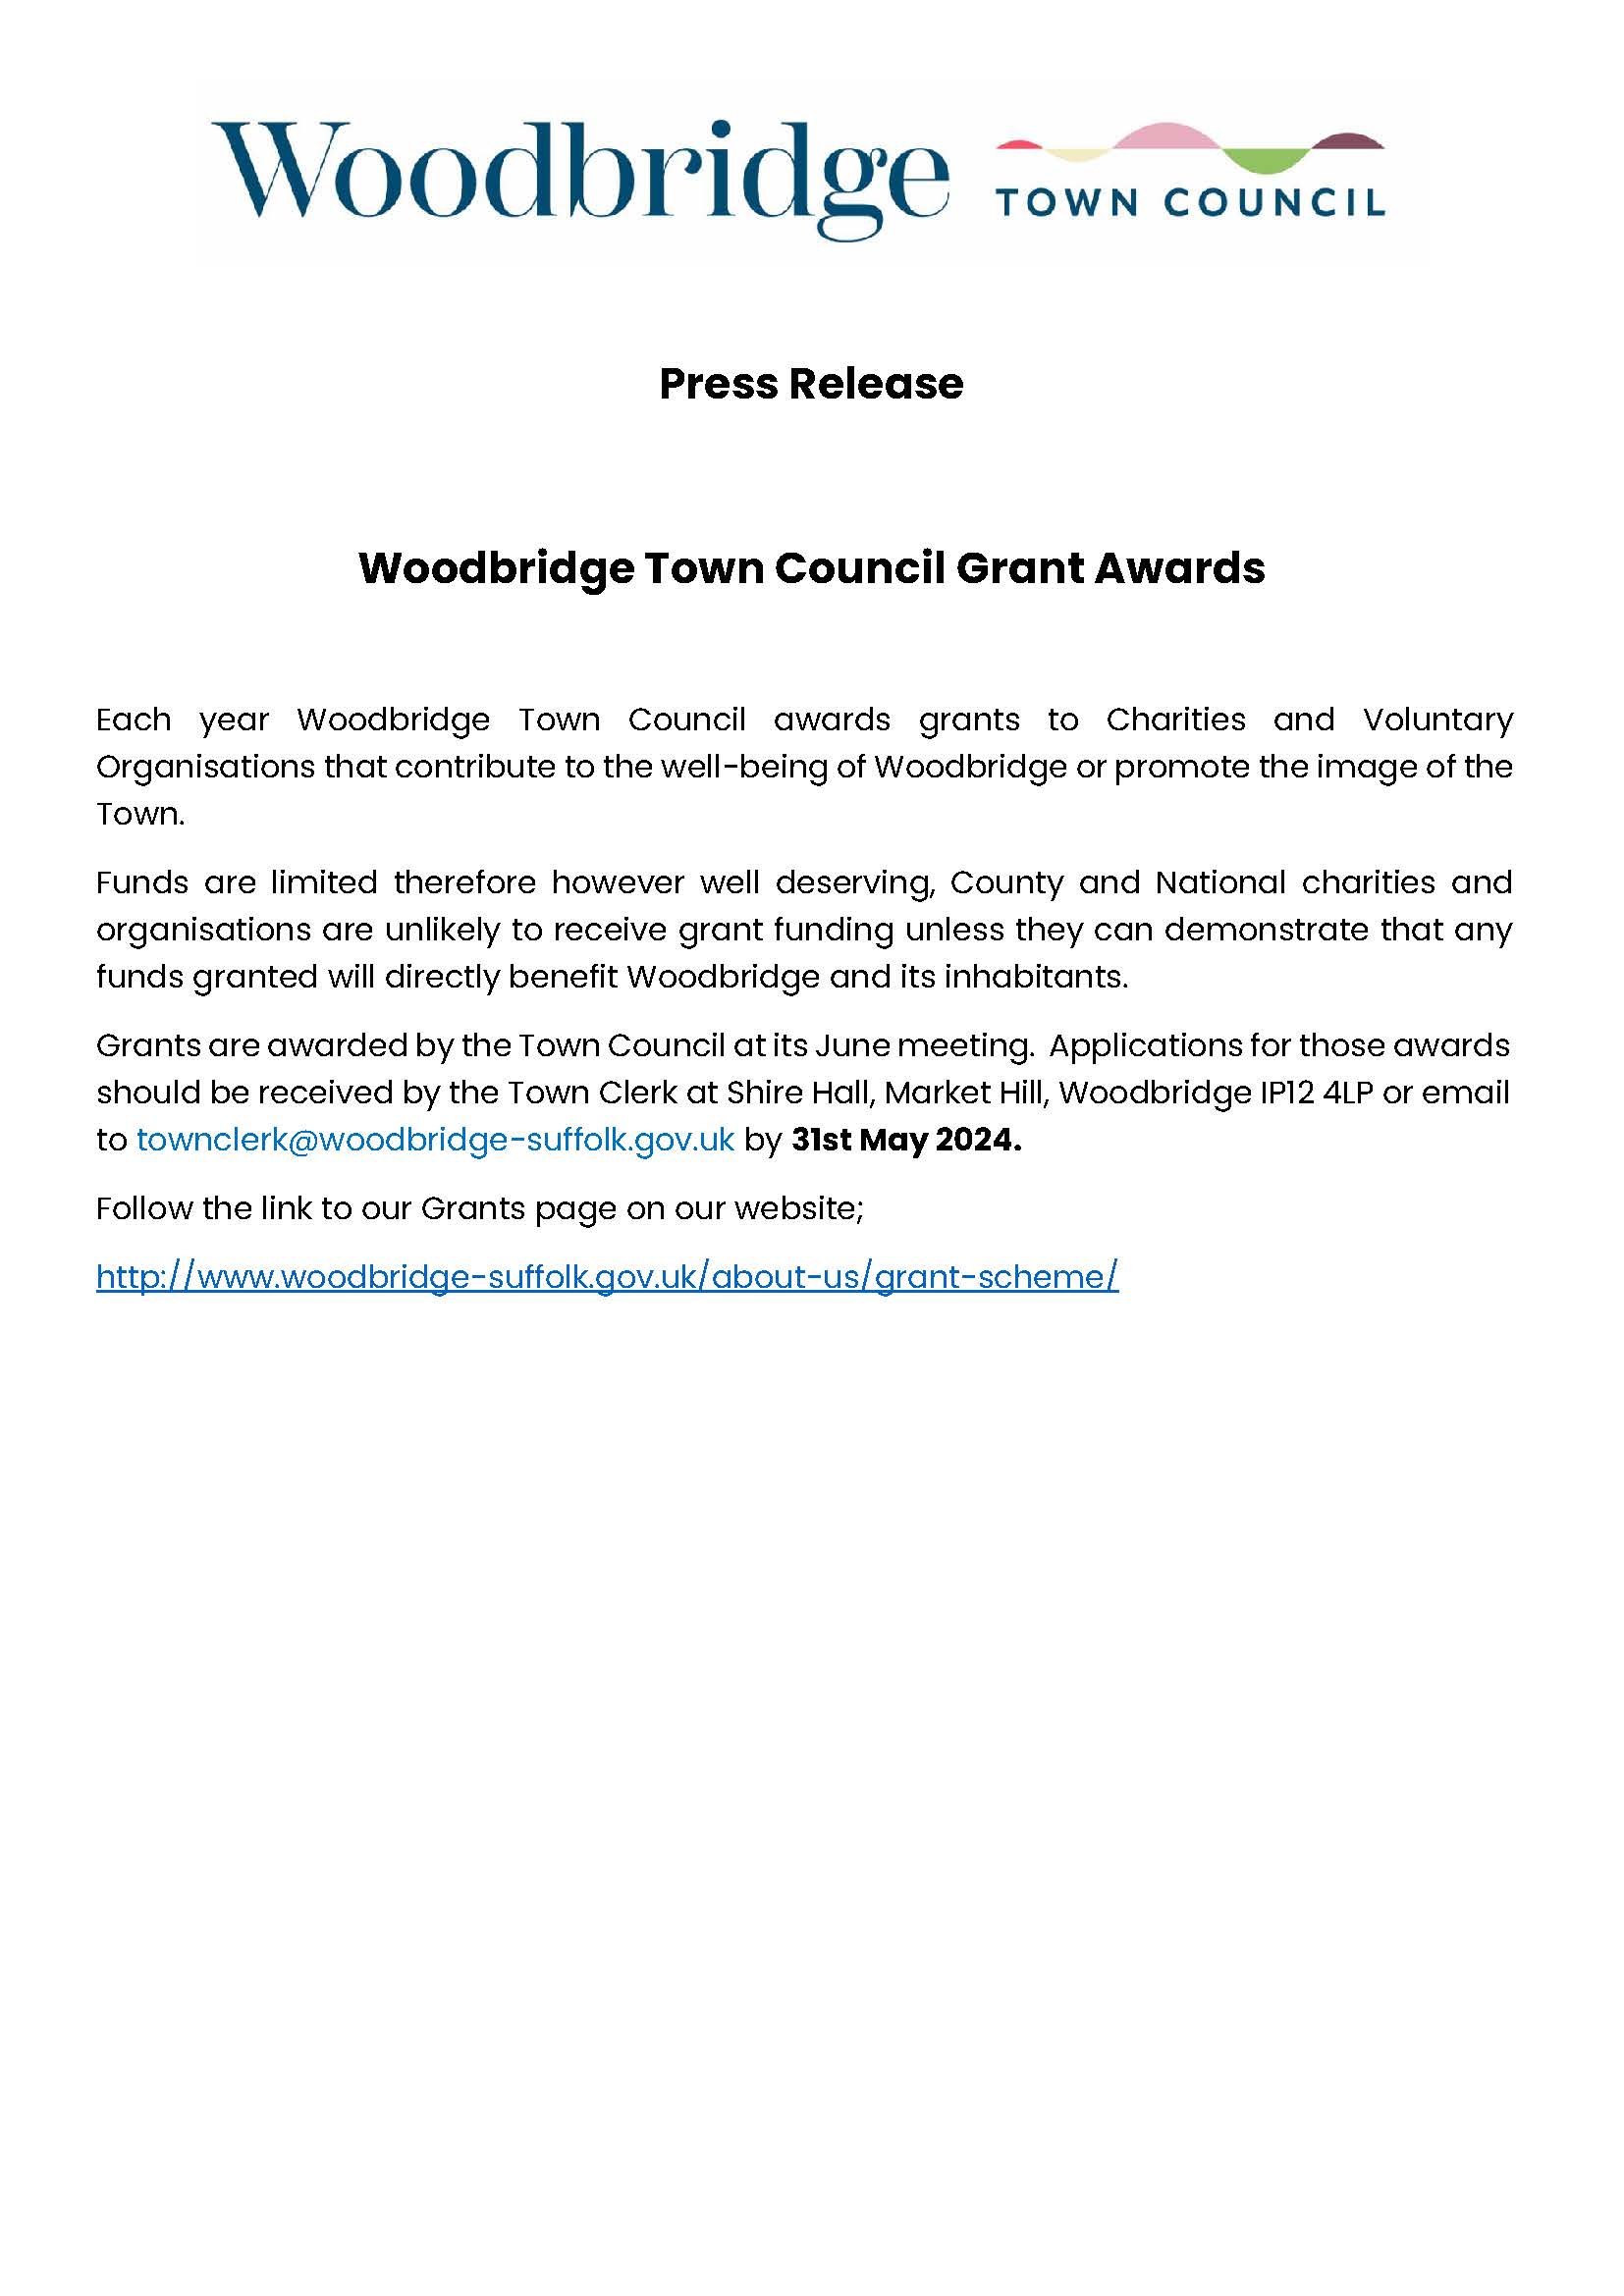 Woodbridge Town Council Grant Awards 2024 image